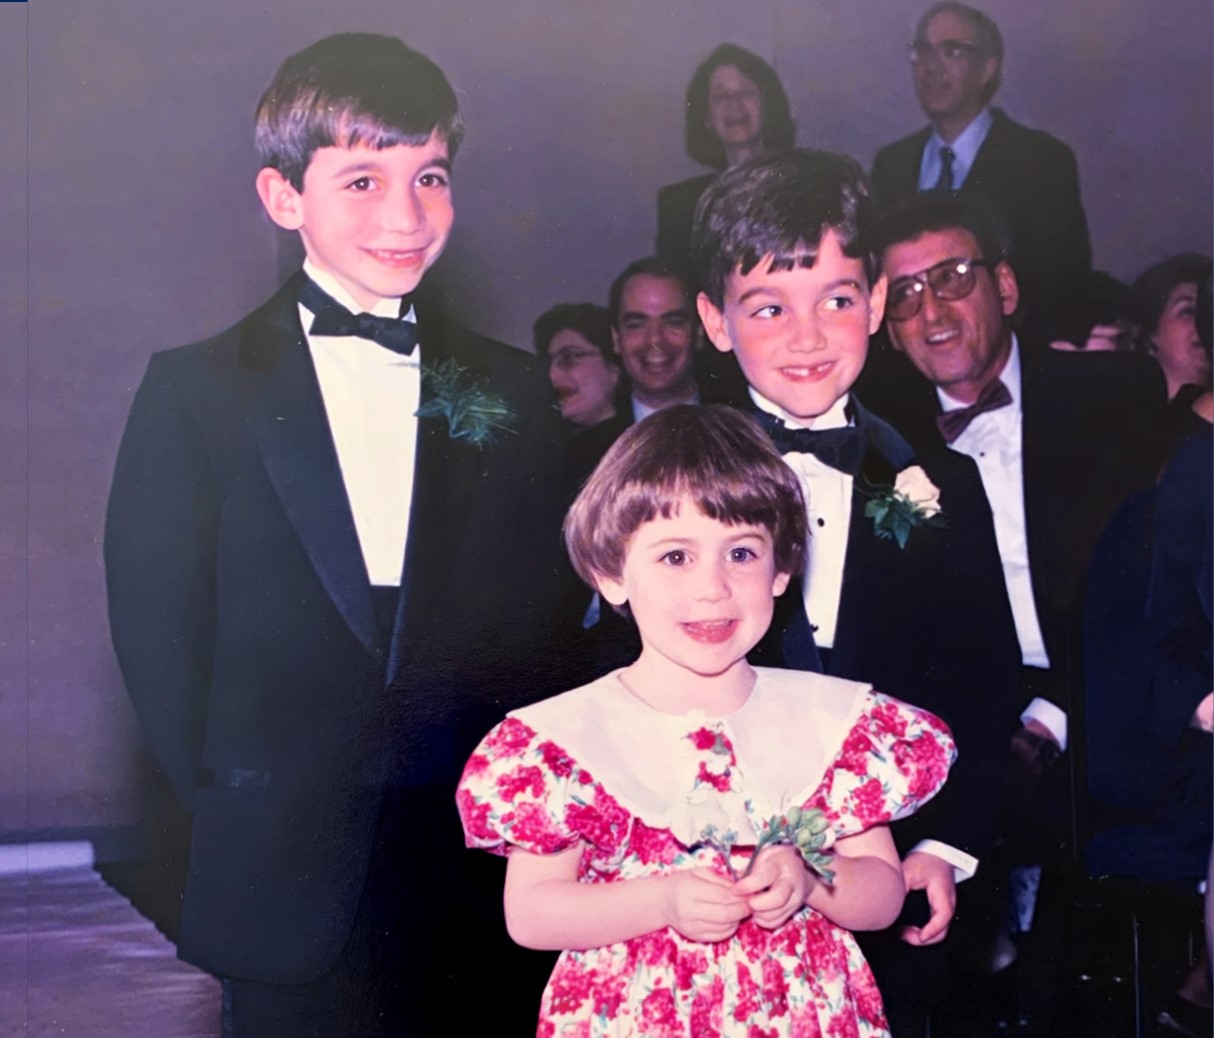 A childhood photo of Dr. Winer's three children.